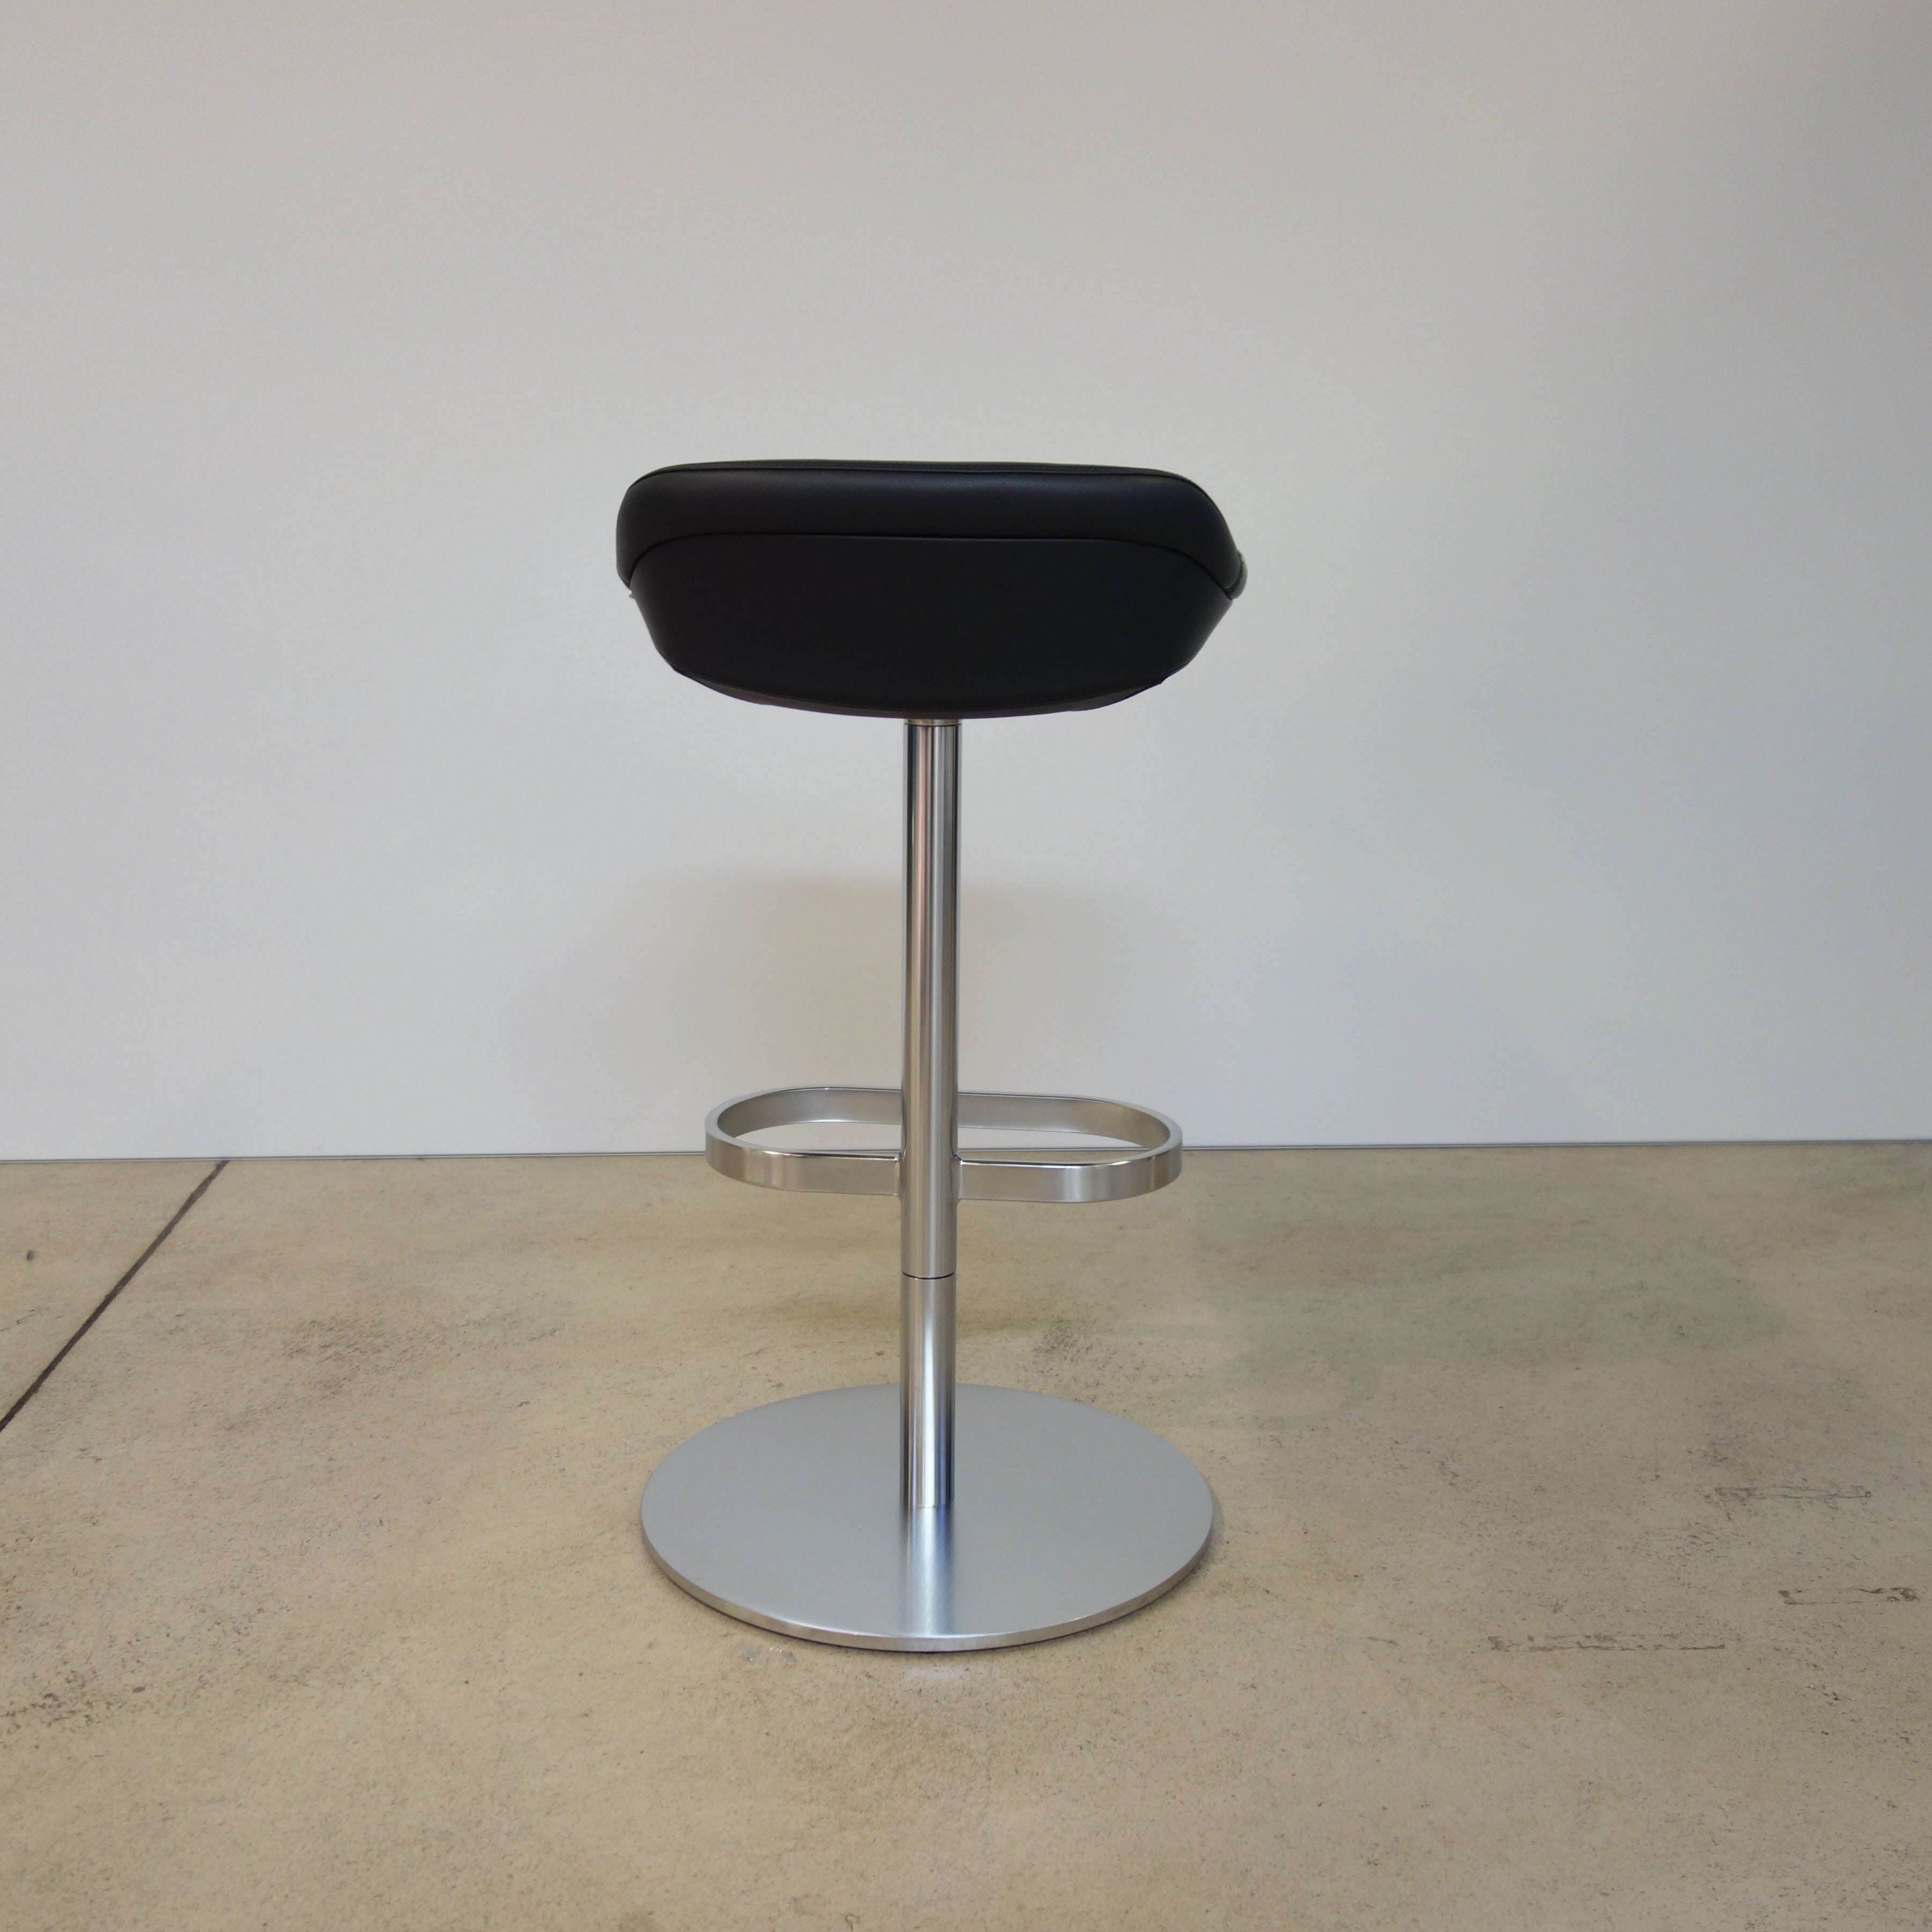 Walter Knoll / Turtle 1578 / bar stool